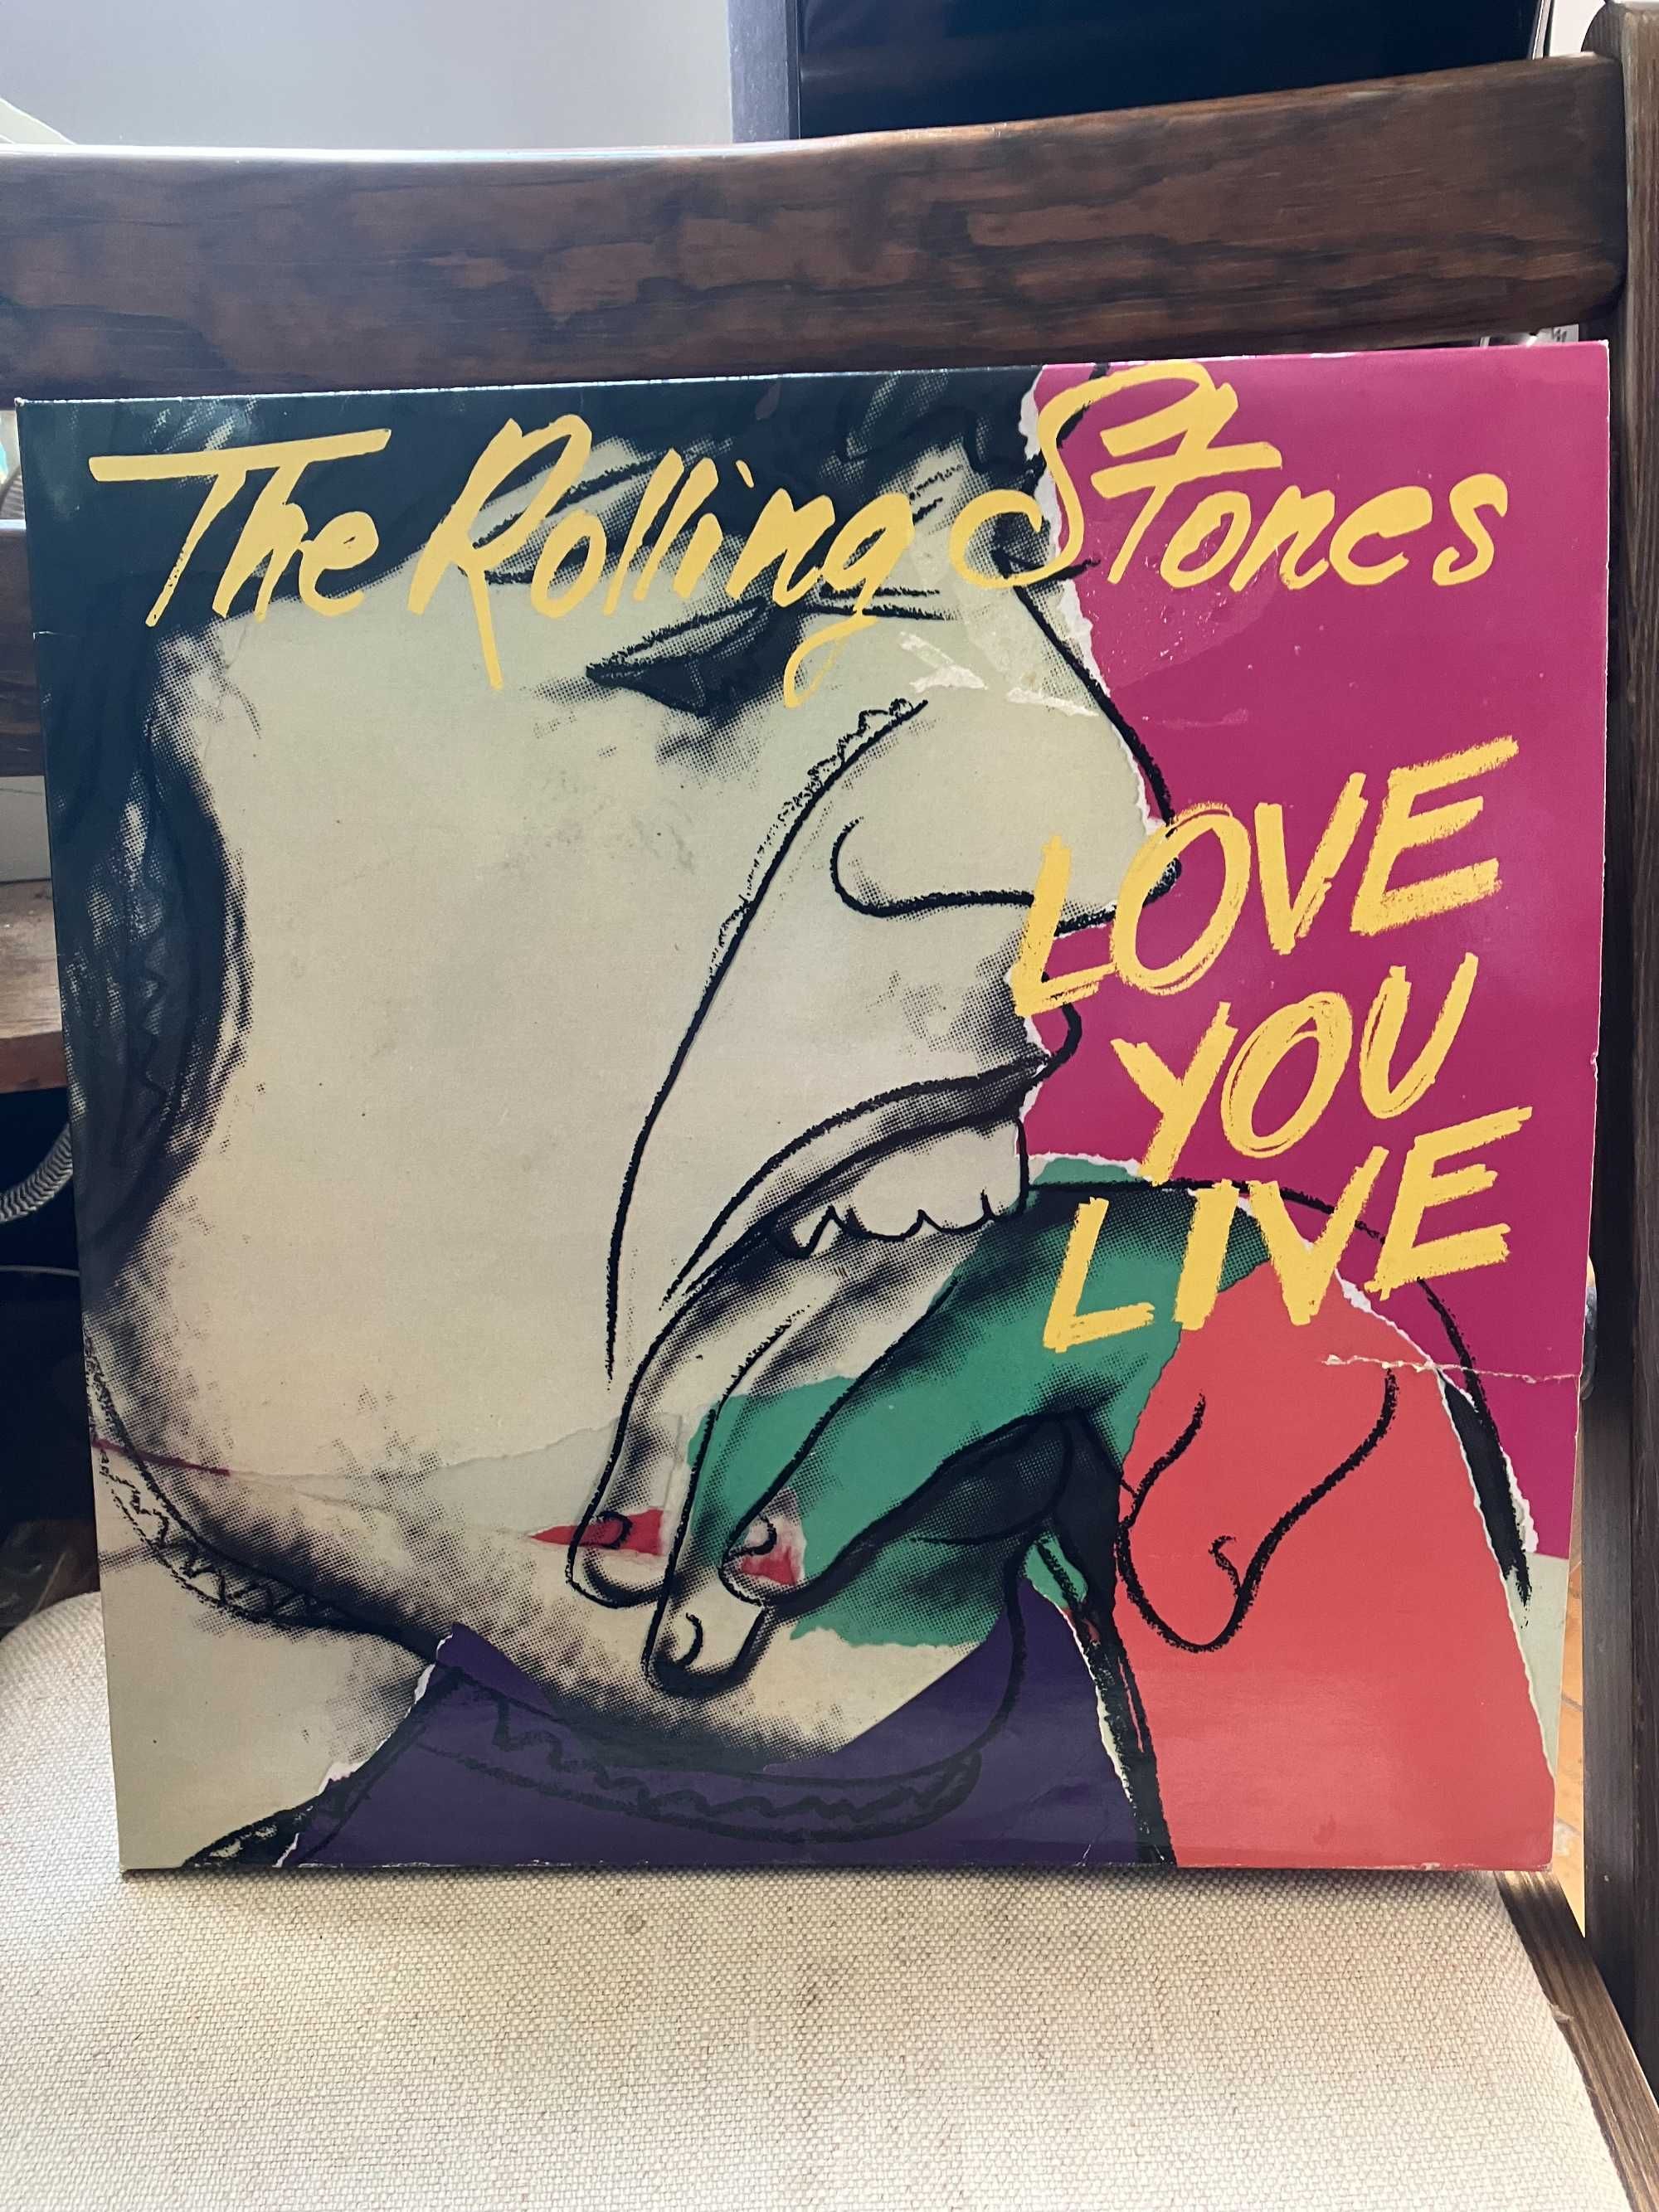 Winyl/album 2 lp The Rolling Stones " Love You Live" near mint